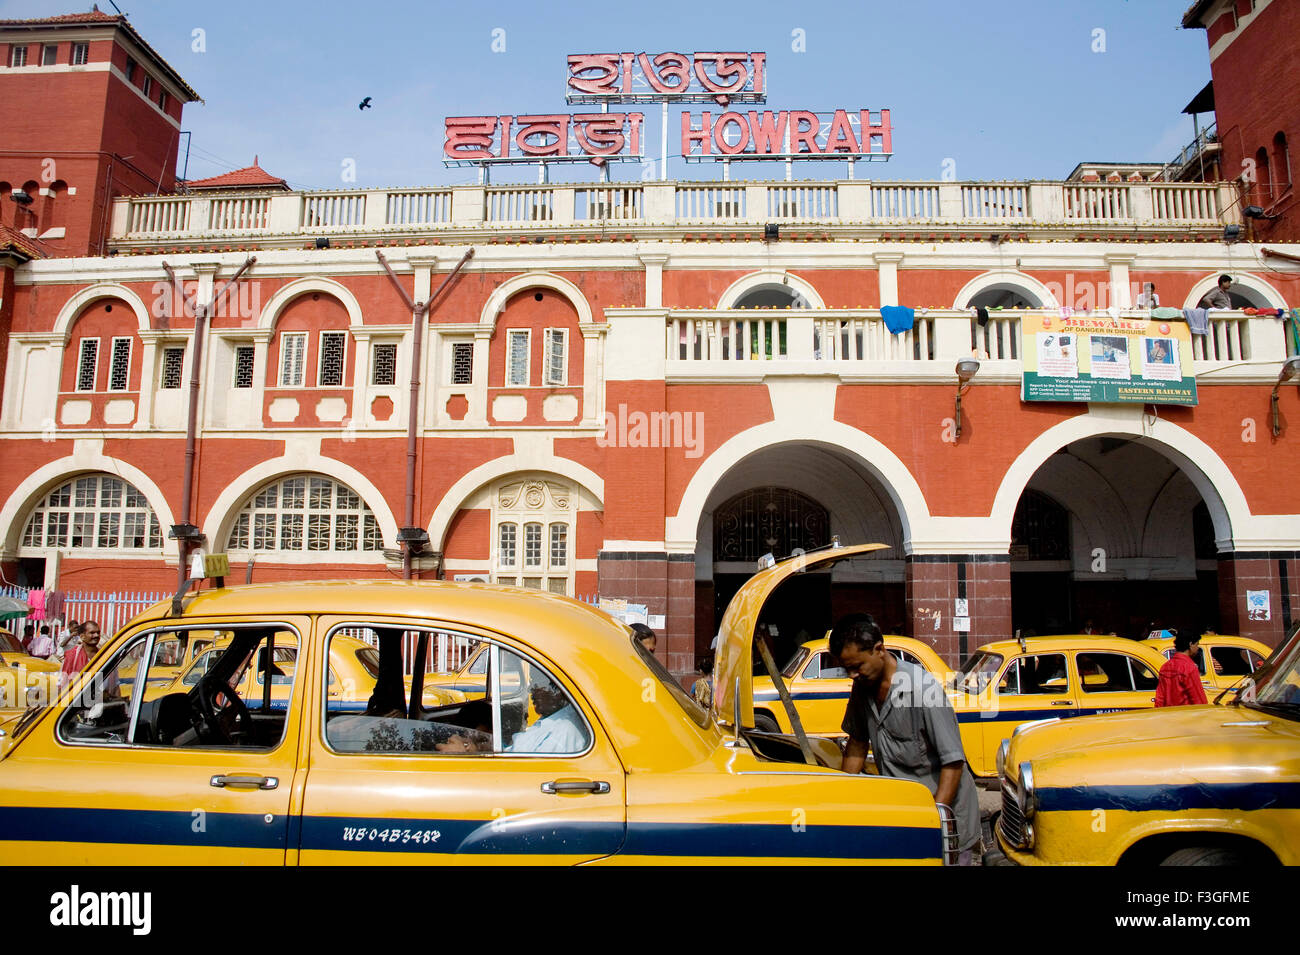 Estación de tren Howrah ; Street Scene ; CALCUTA Calcuta ; en Bengala Occidental, India ; Foto de stock